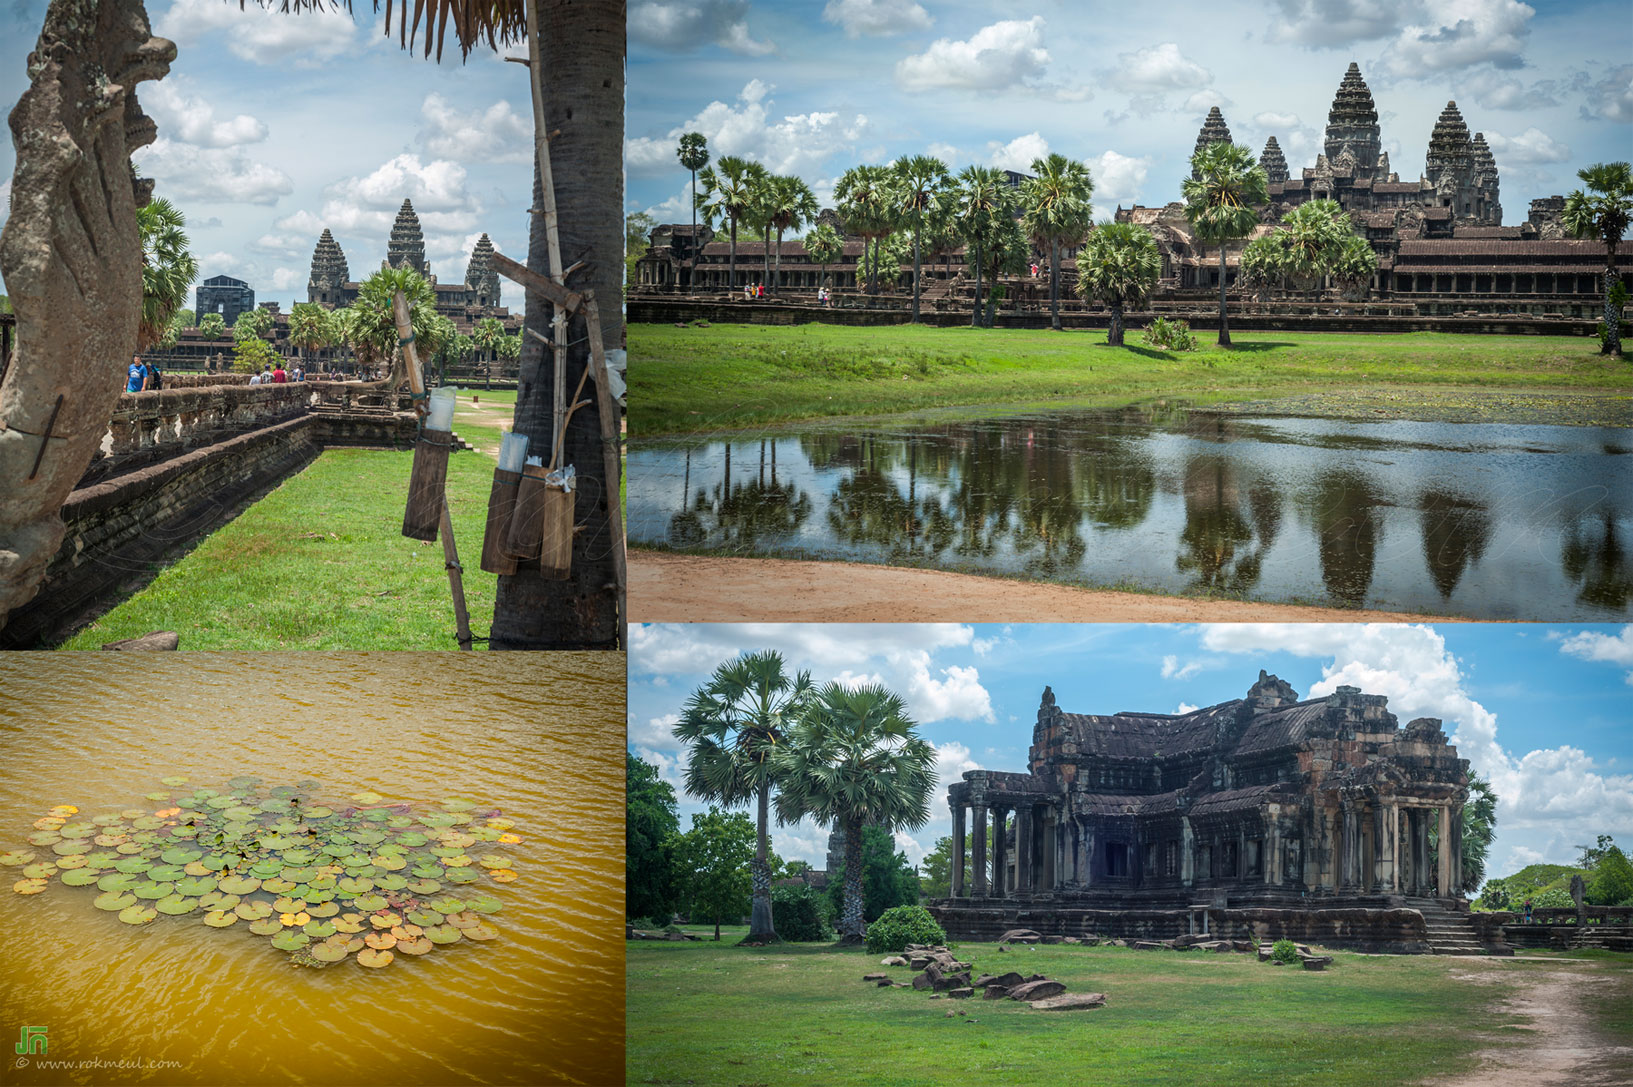 Mandatory visit - Angkor Wat, Siem Reap